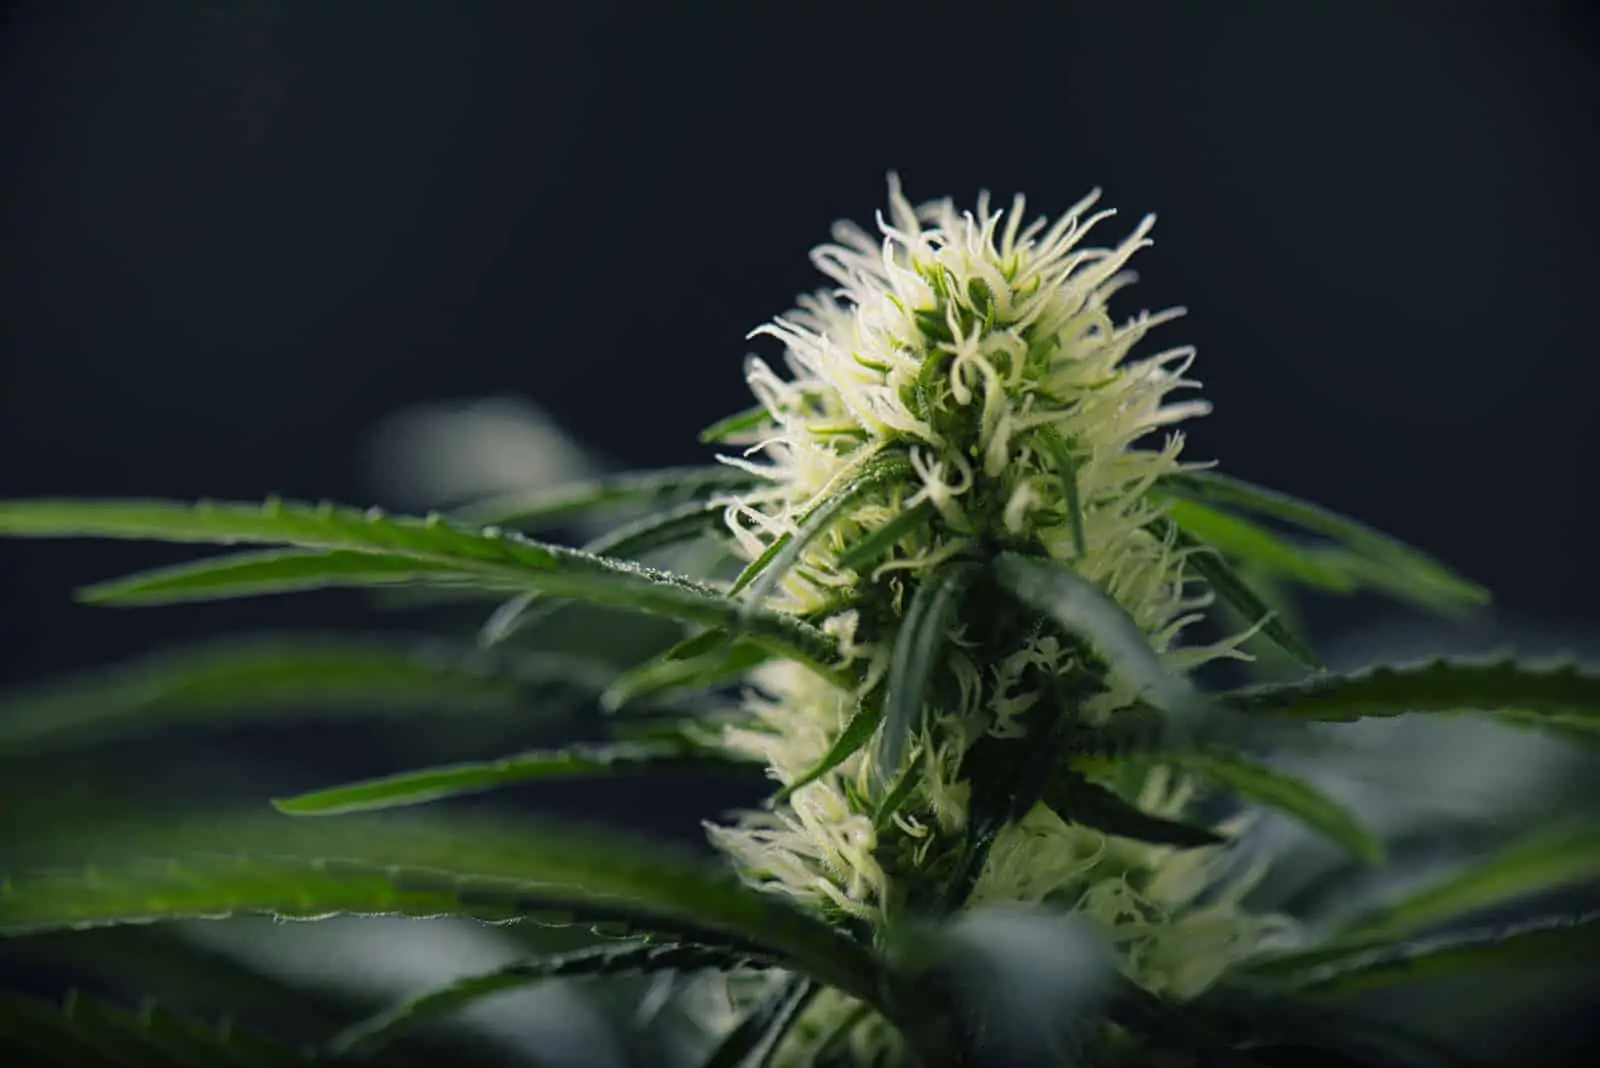 Preflowering cannabis stage. Cannabis Plant preflower.